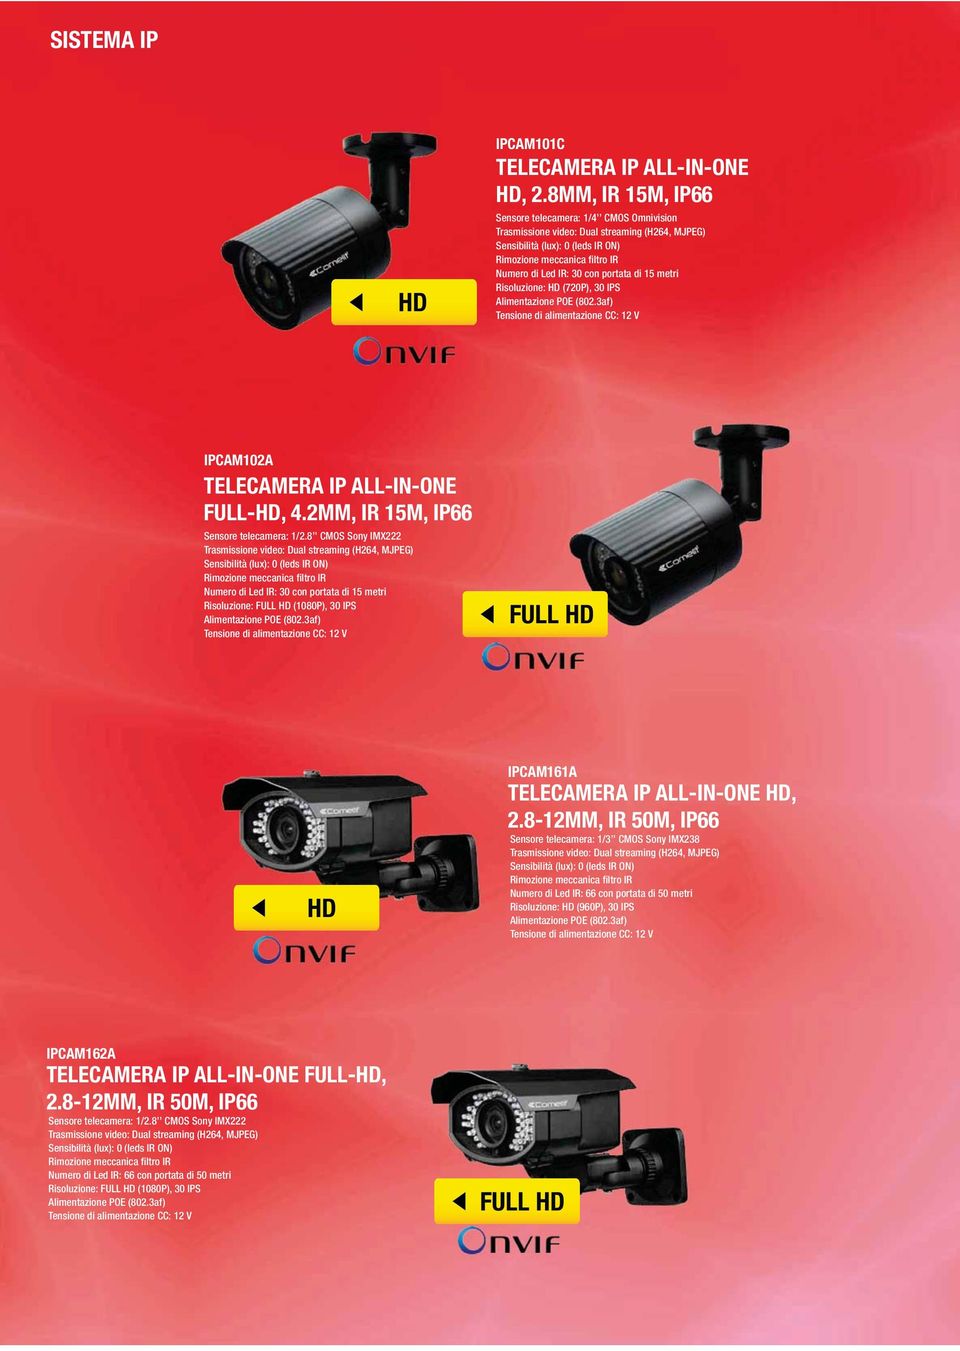 HD (720P), 30 IPS Alimentazione POE (802.3af) IPCAM102A TELECAMERA IP ALL-IN-ONE FULL-HD, 4.2MM, IR 15M, IP66 Sensore telecamera: 1/2.